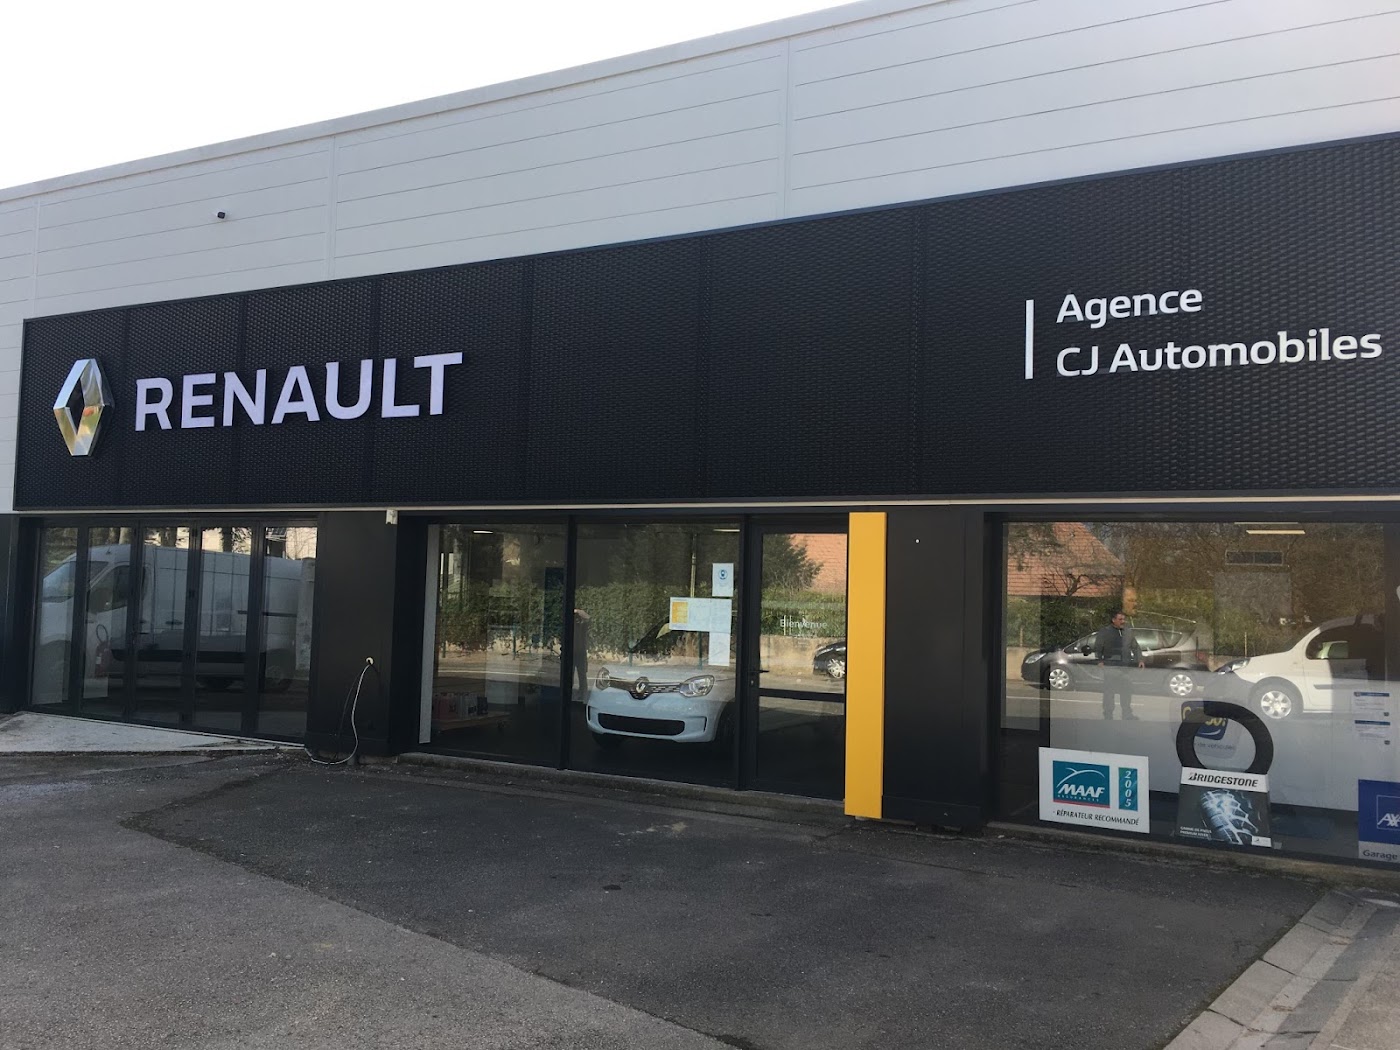 Renault - Agence CJ Automobiles